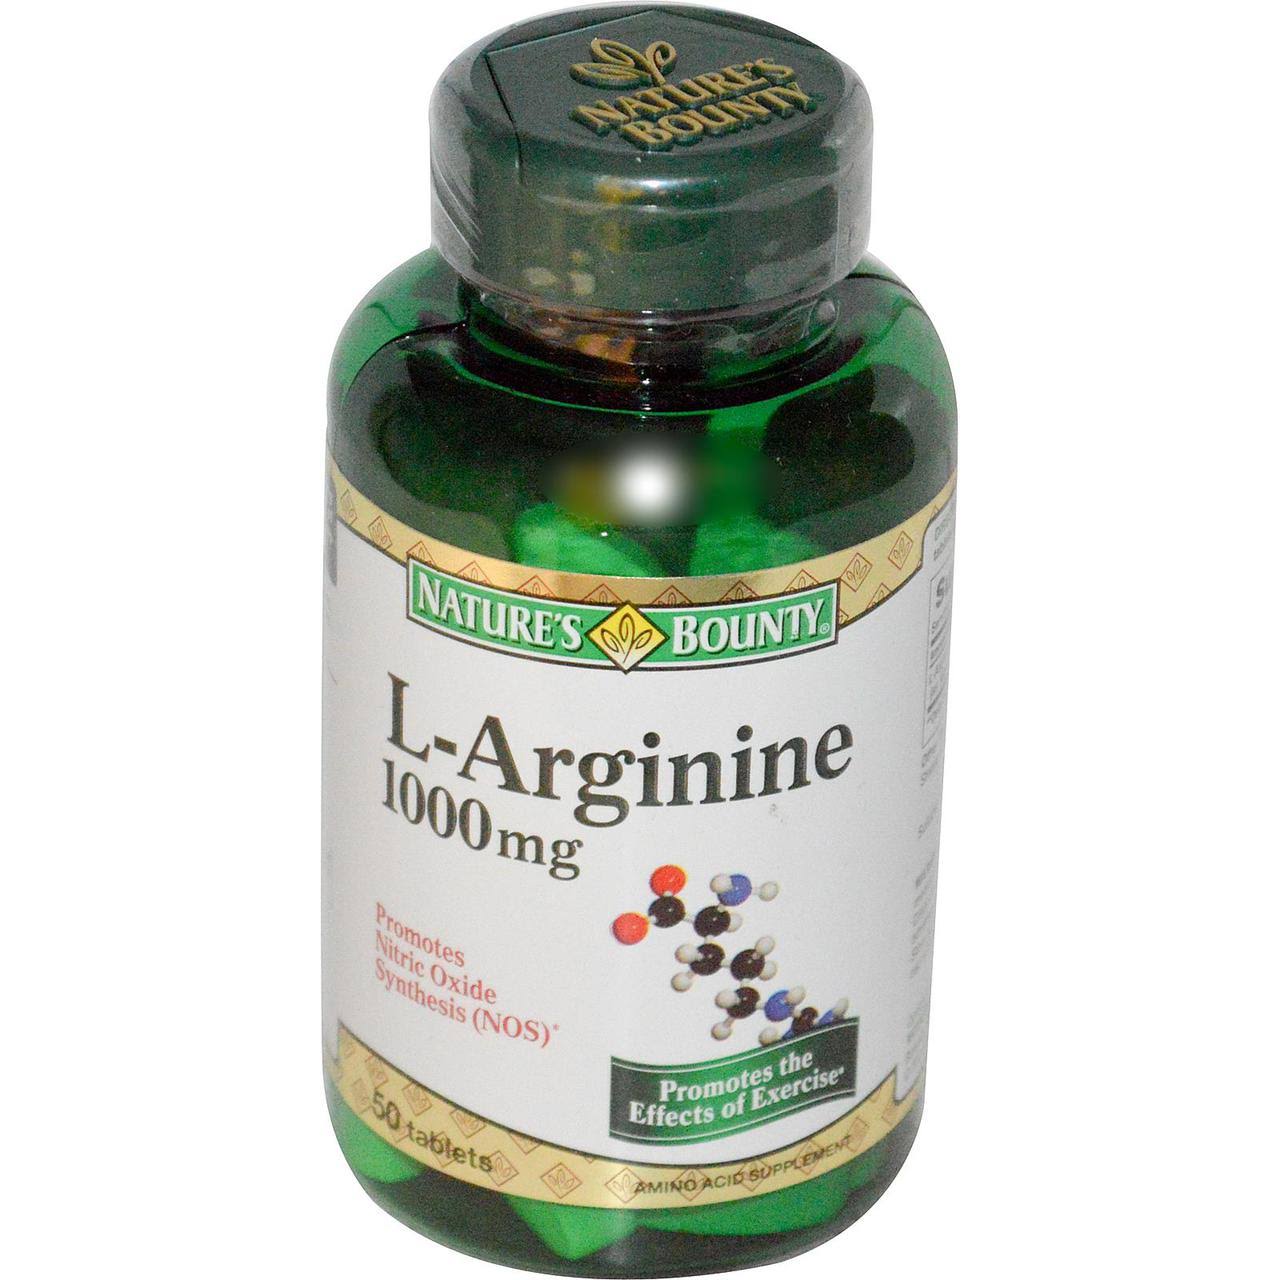 Nature's Bounty L-Arginine - 1000mg, 50 Tablets